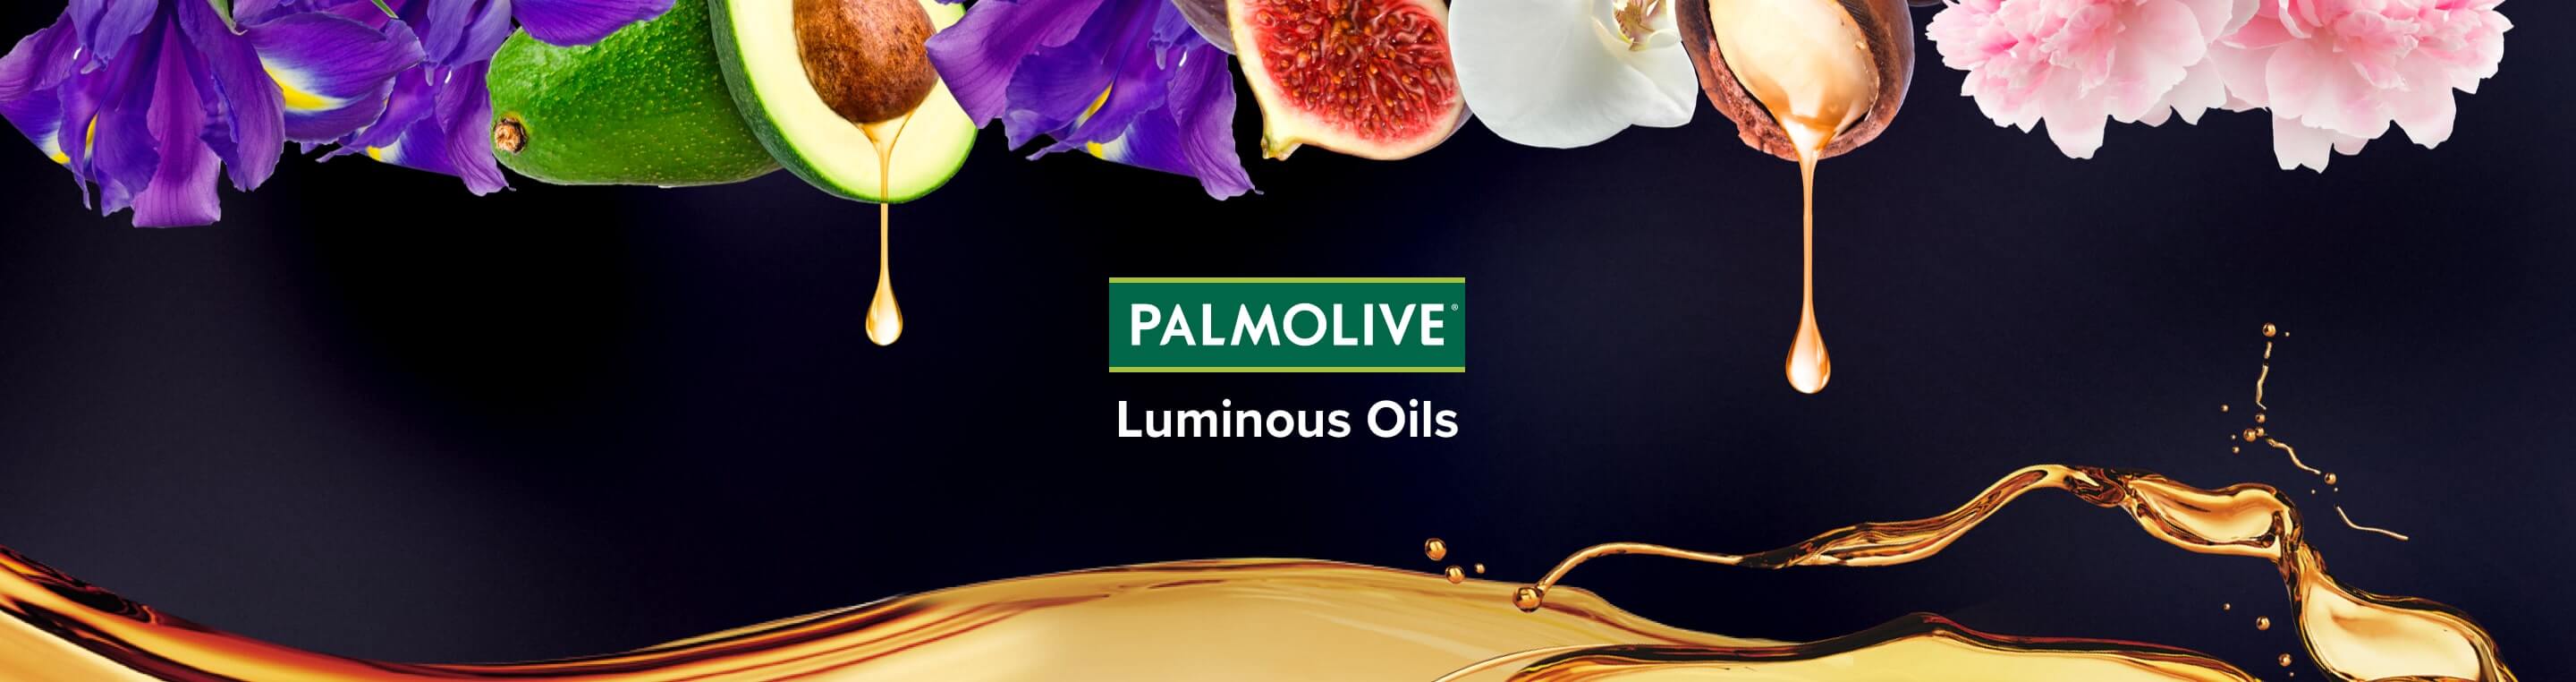 Luminous Oils banner